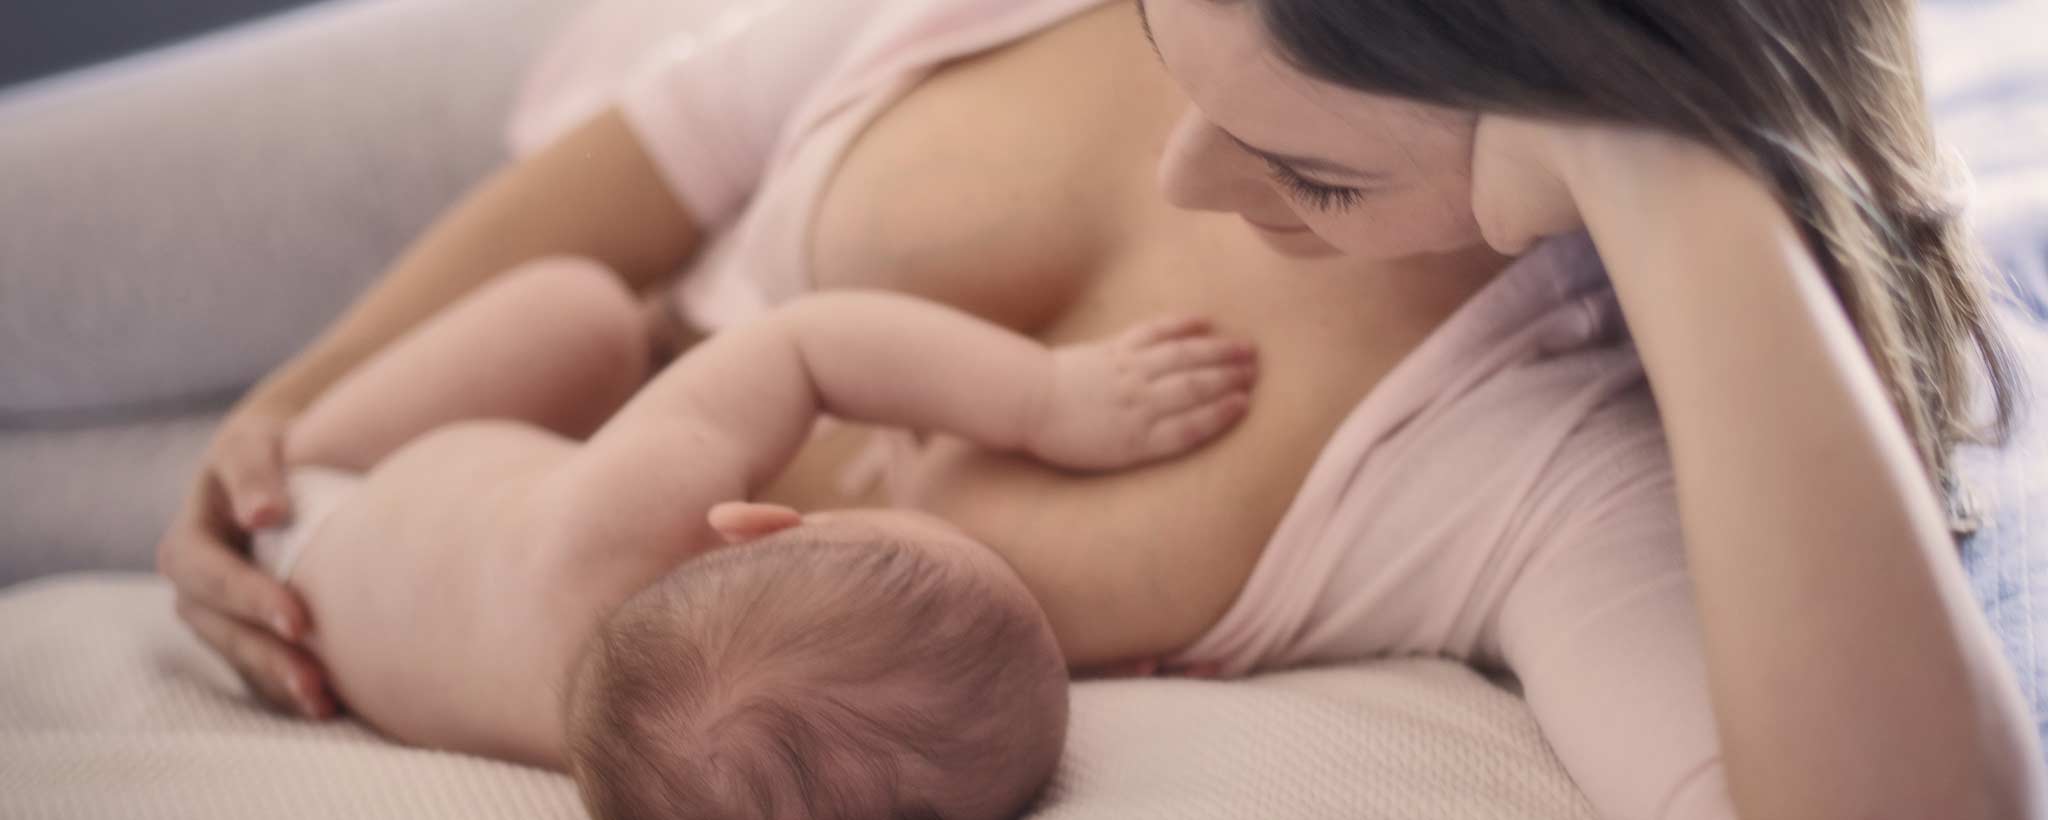 'Mother breastfeeding newborn baby'